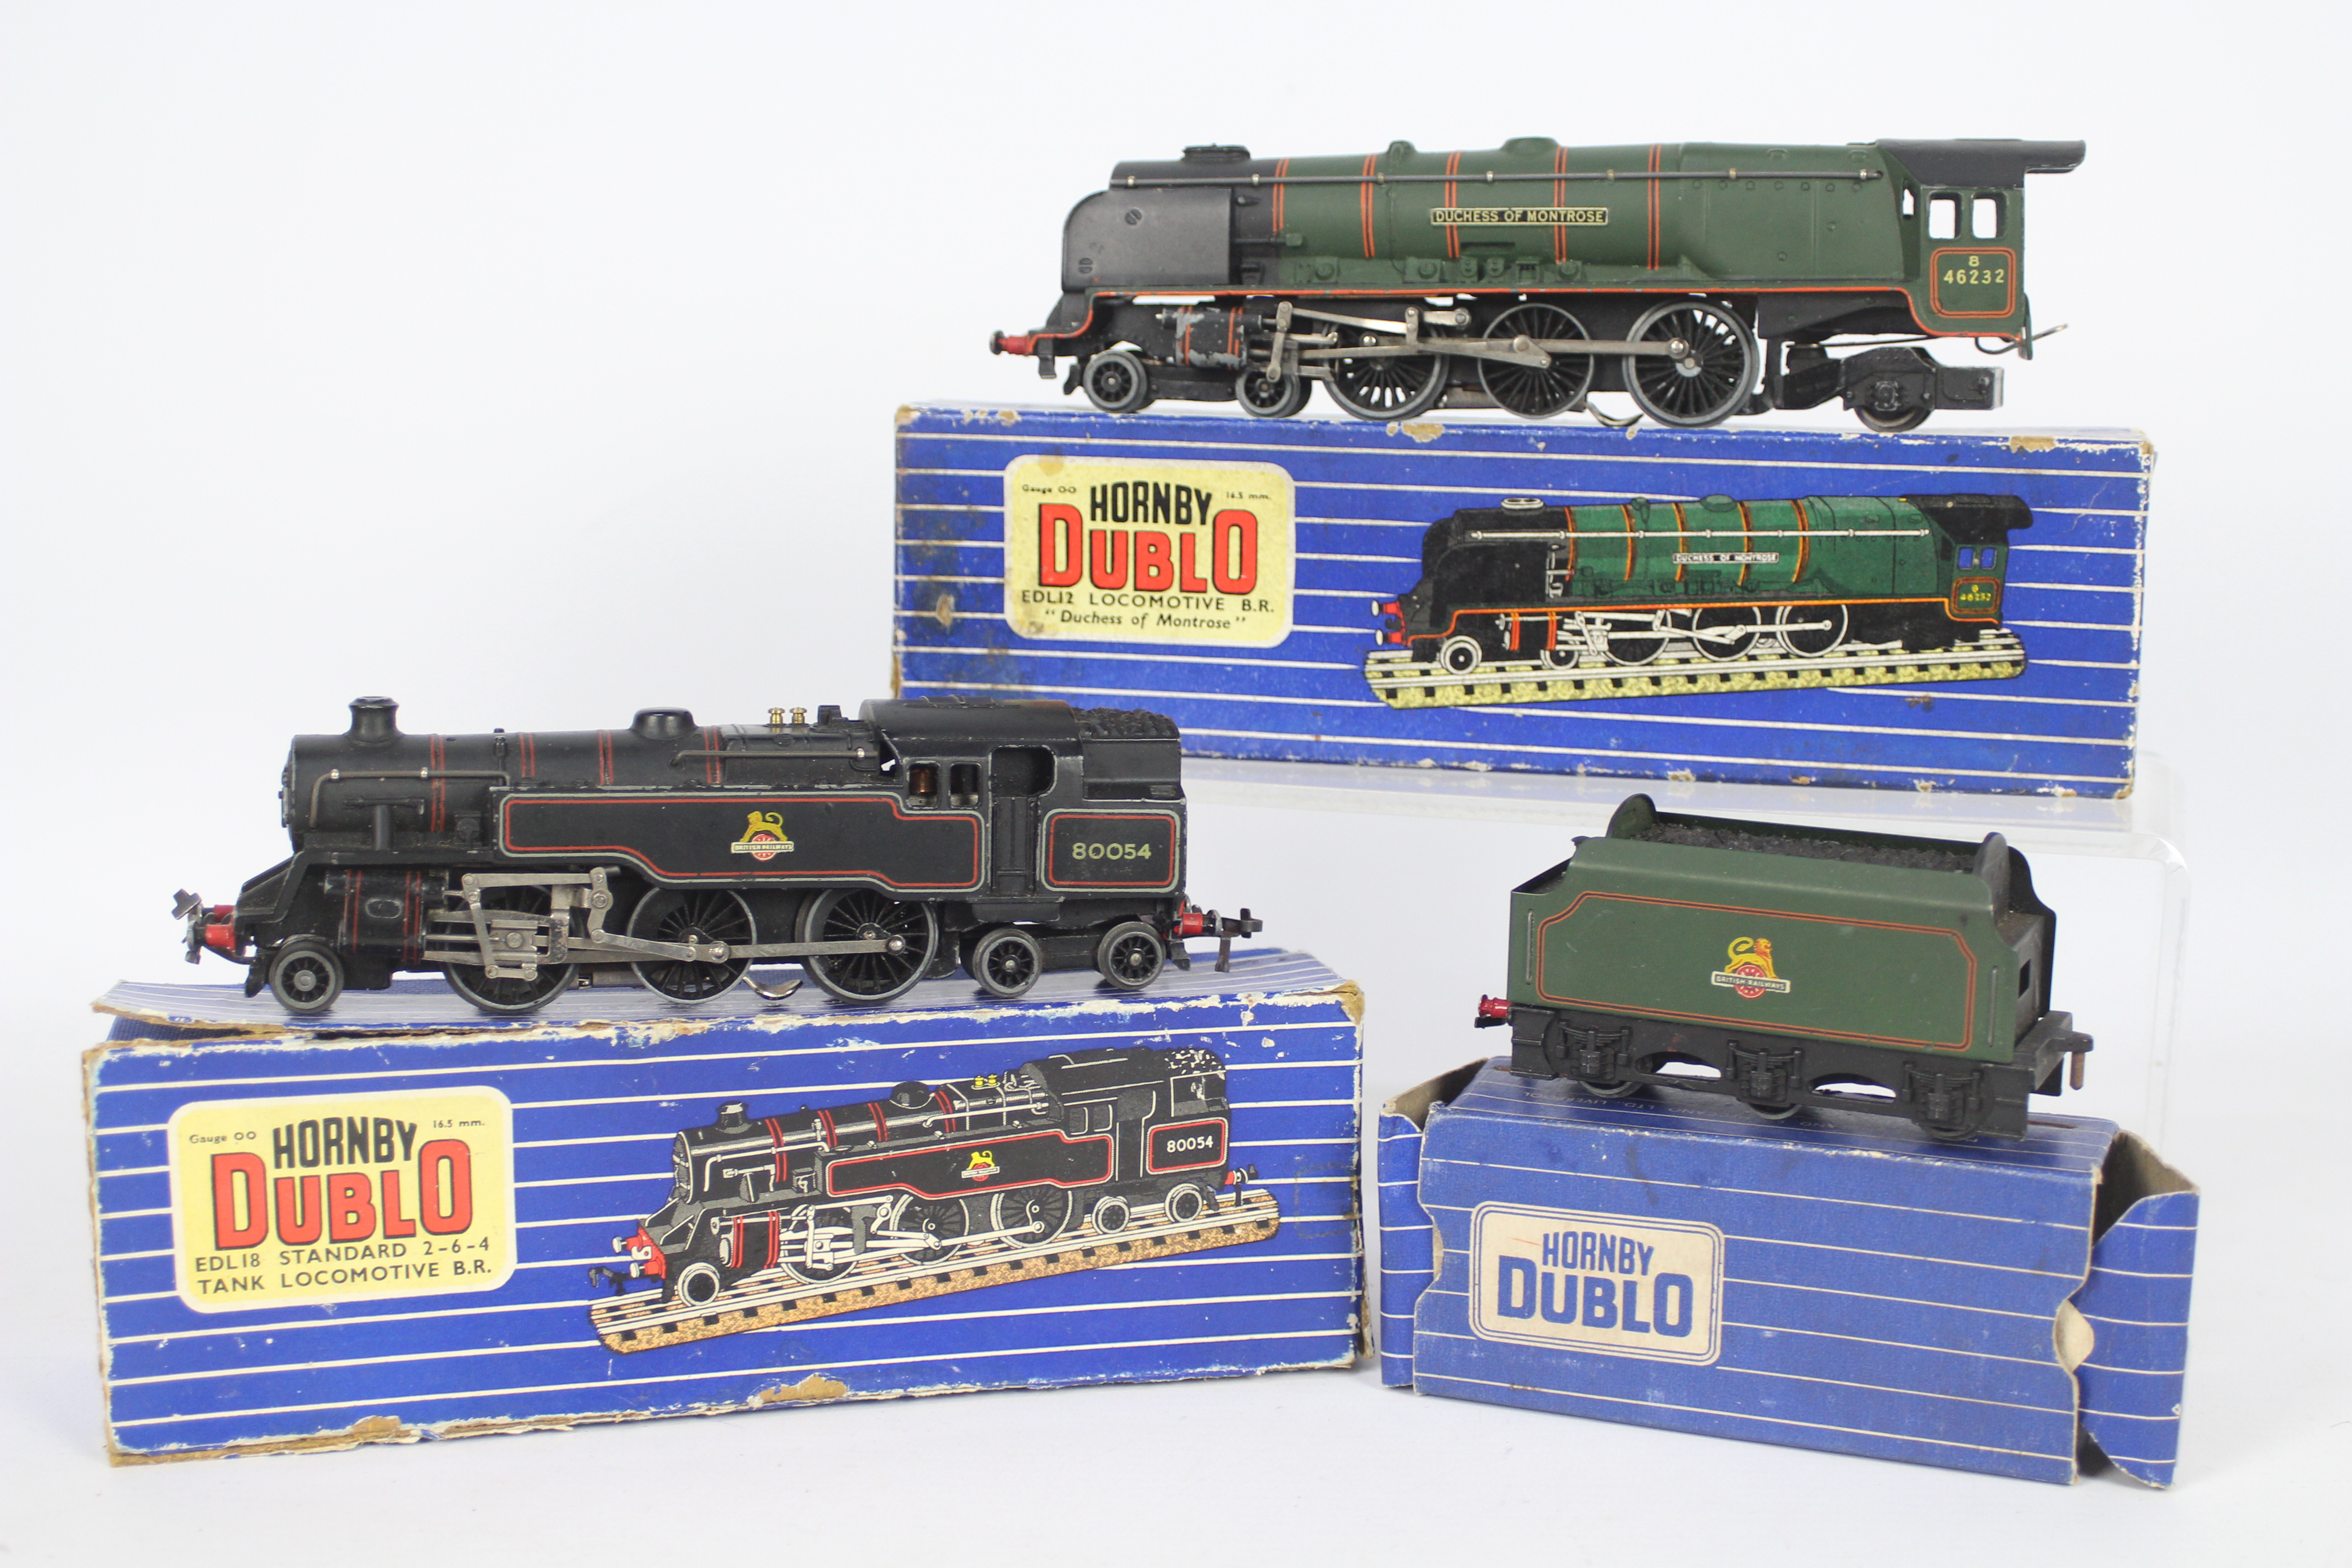 Hornby Dublo - Two boxed Hornby Dublo locomotives.